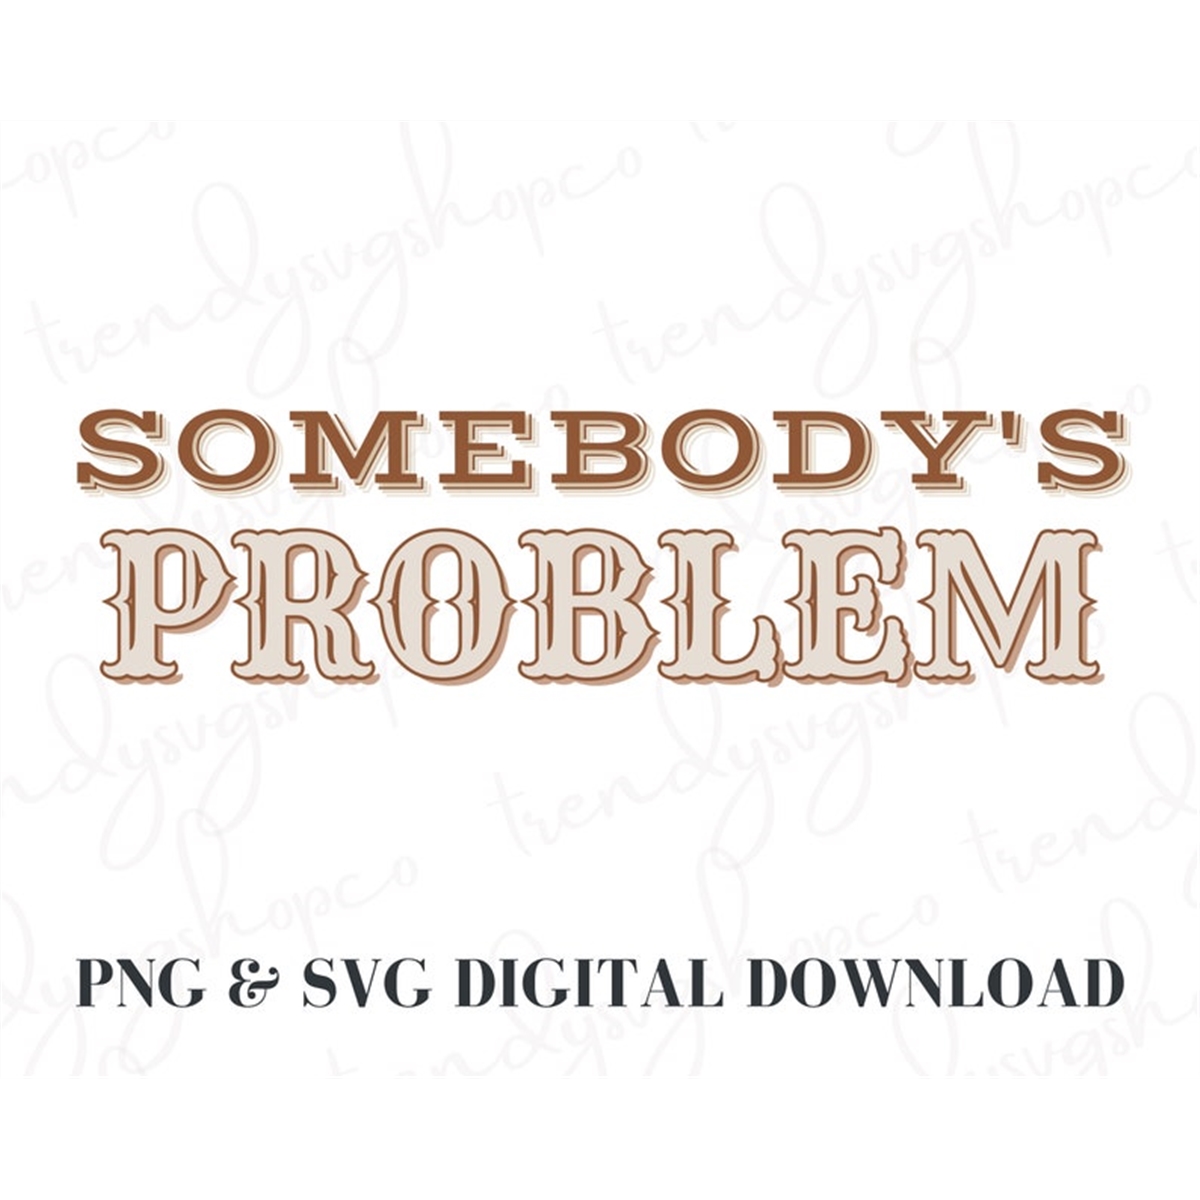 somebodys-problem-morgan-wallen-country-music-svg-wallen-image-1